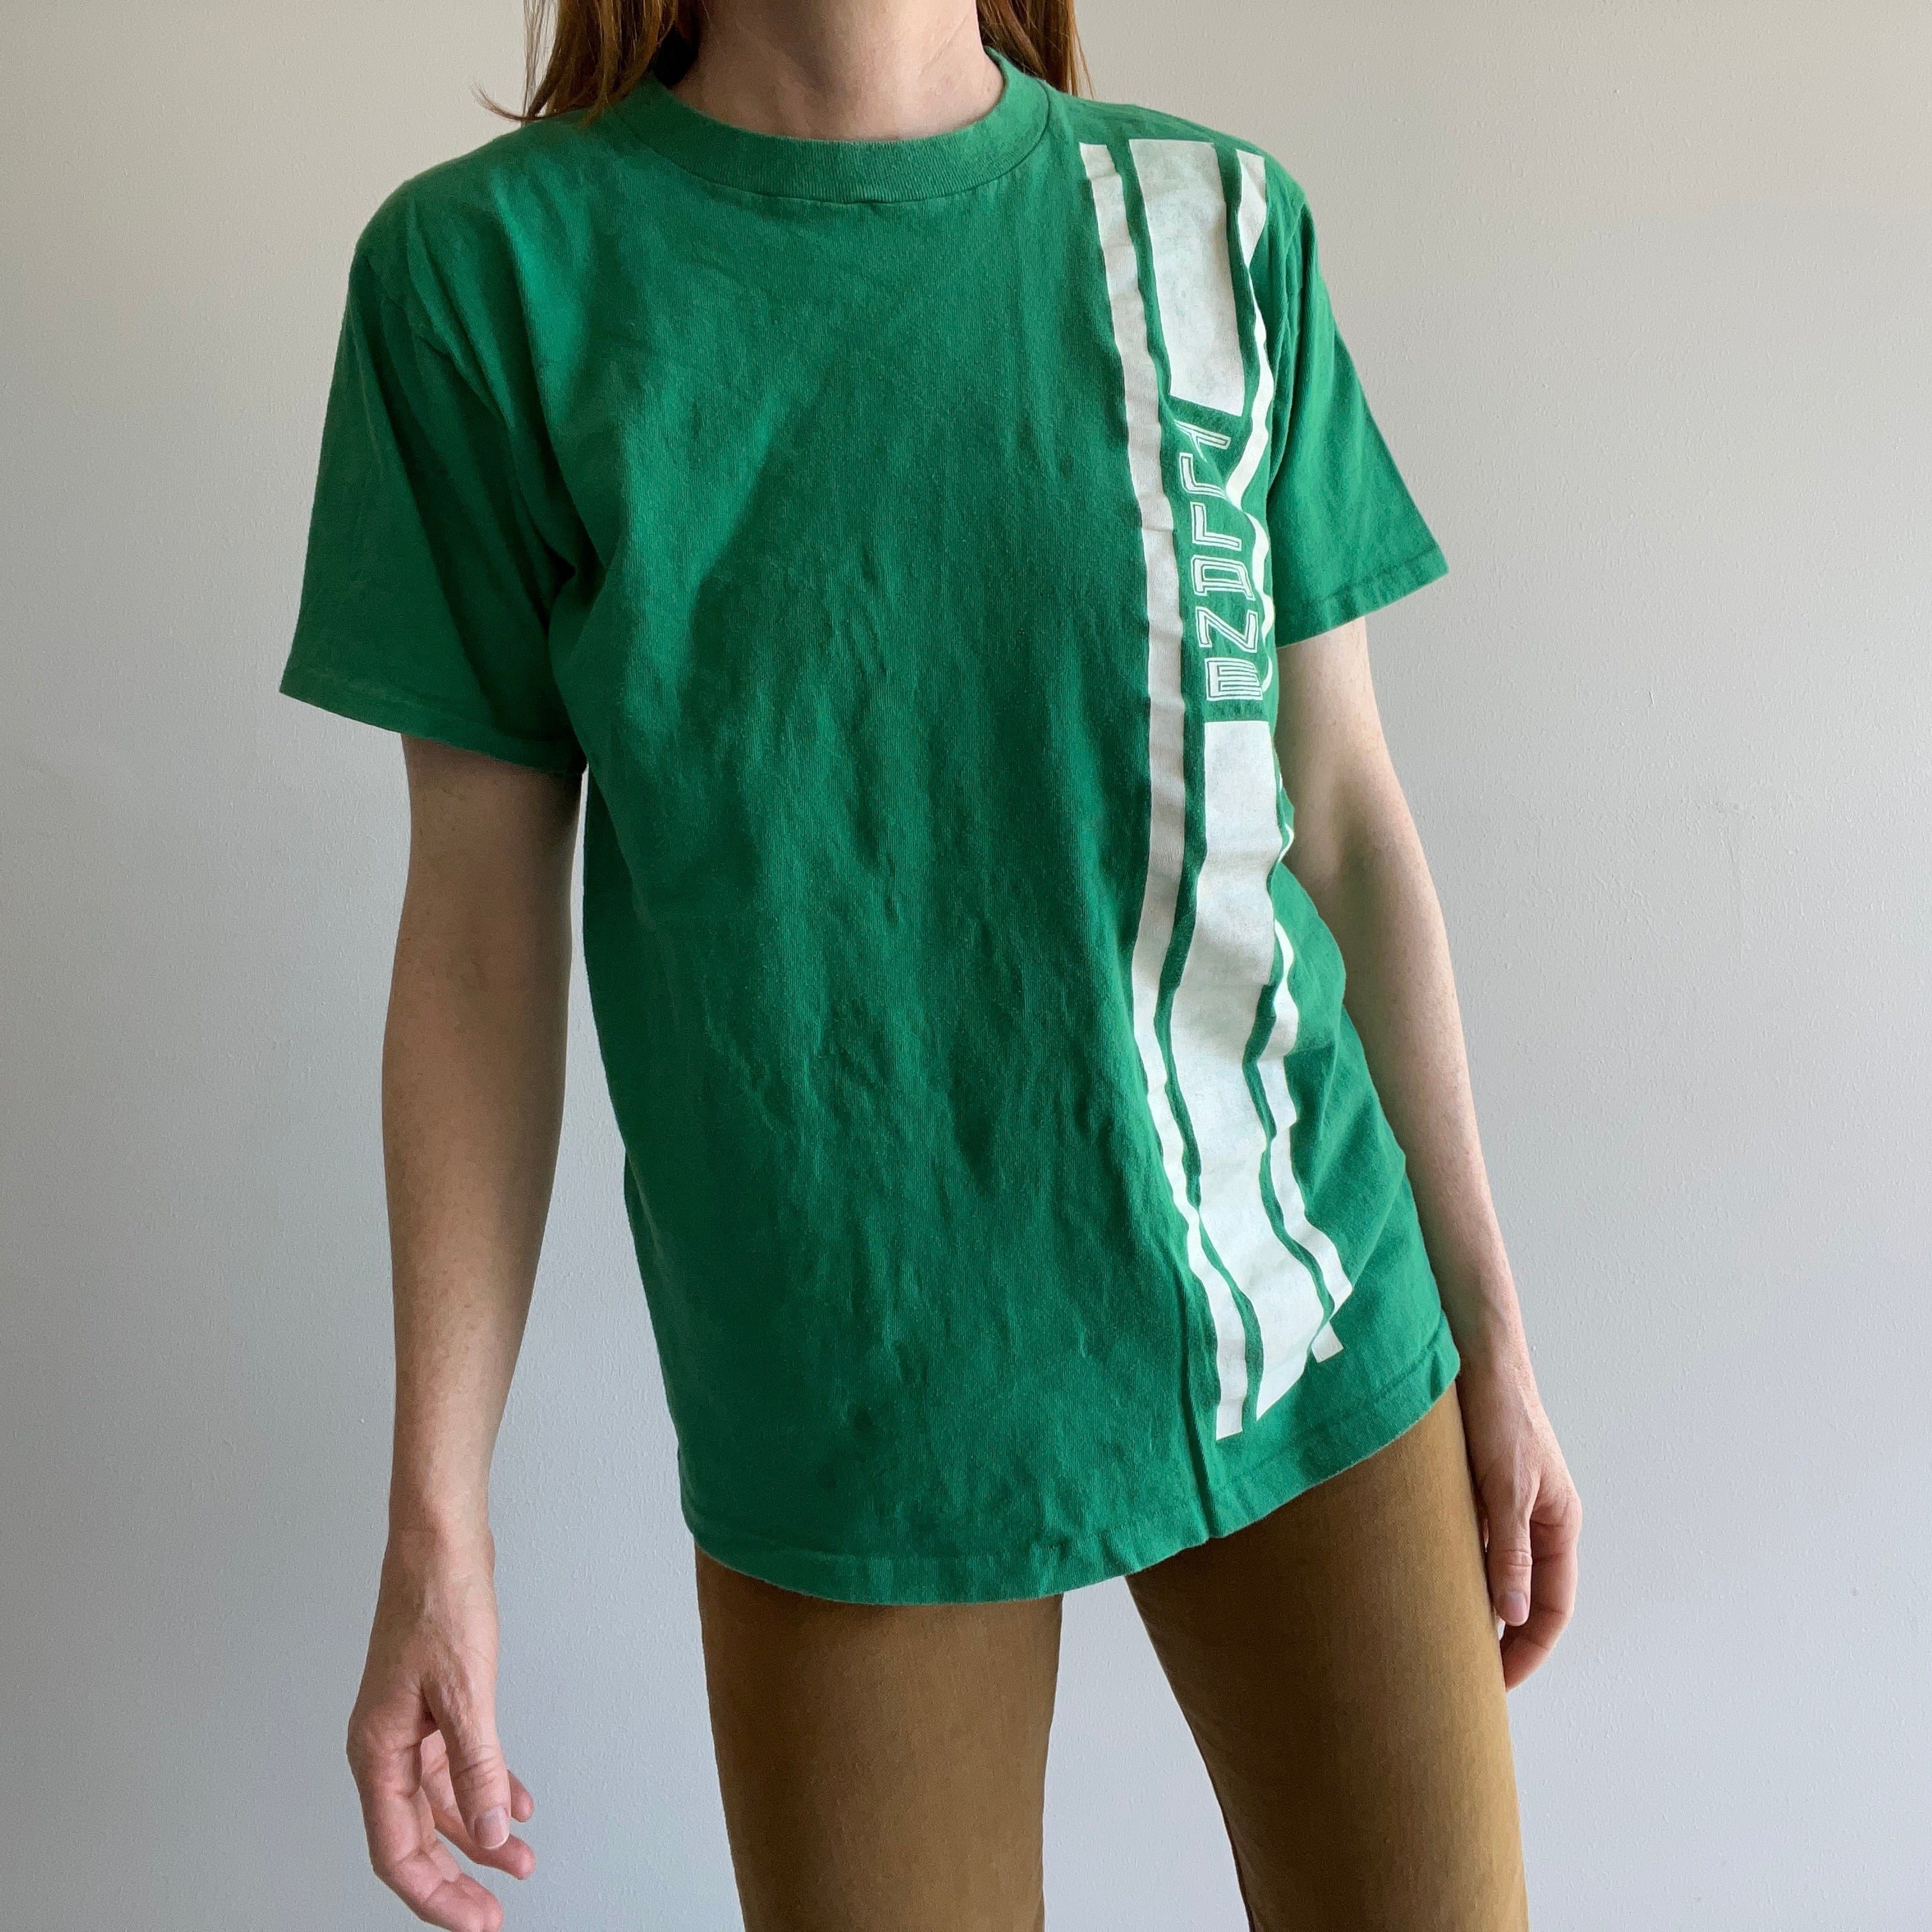 1970s Tulane University Weirdly Stained T-Shirt